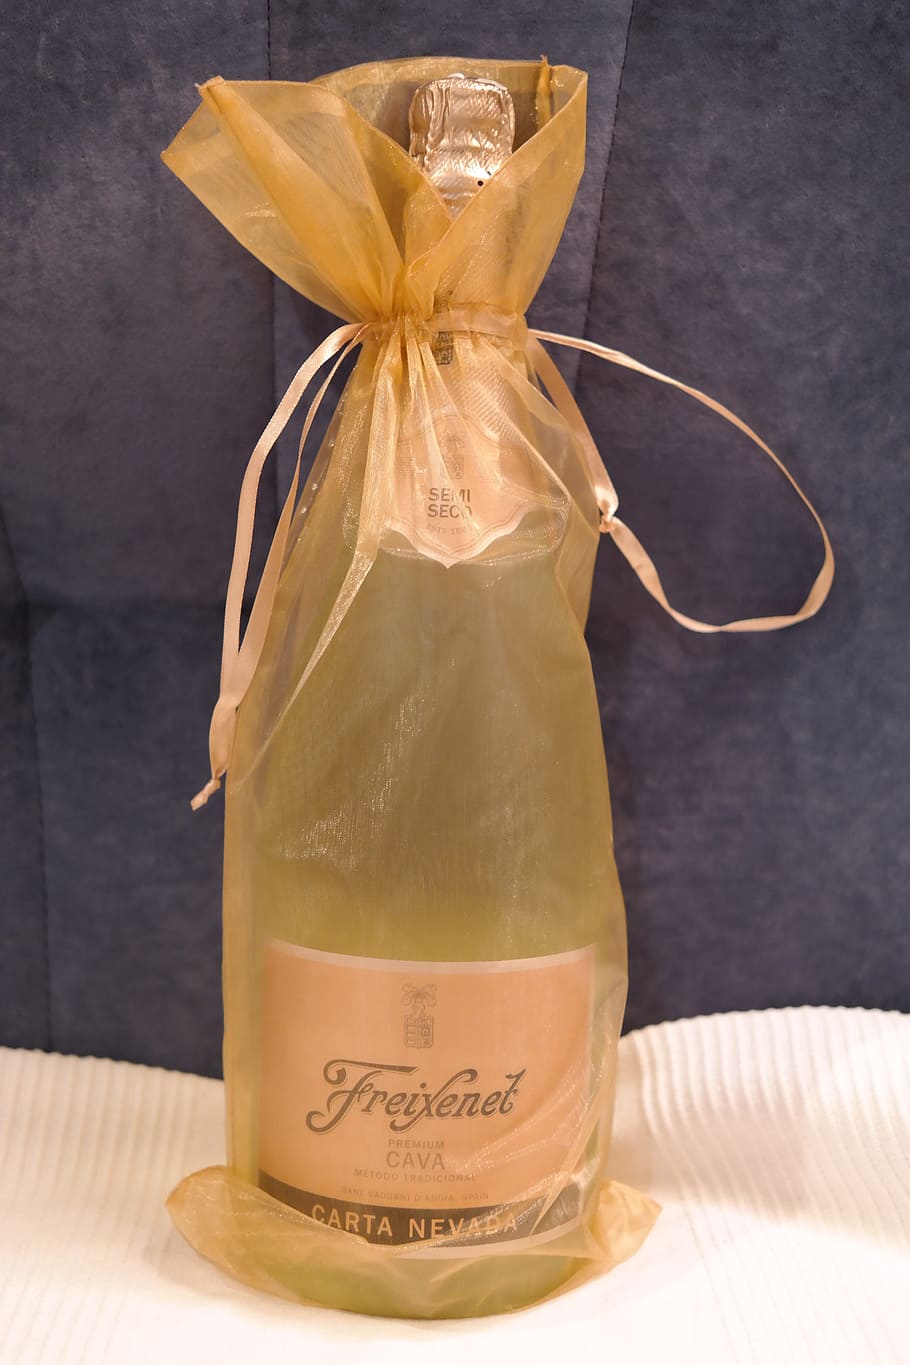 Freixenet Carta Nevada bottle in brown drawstring pouch, champagne